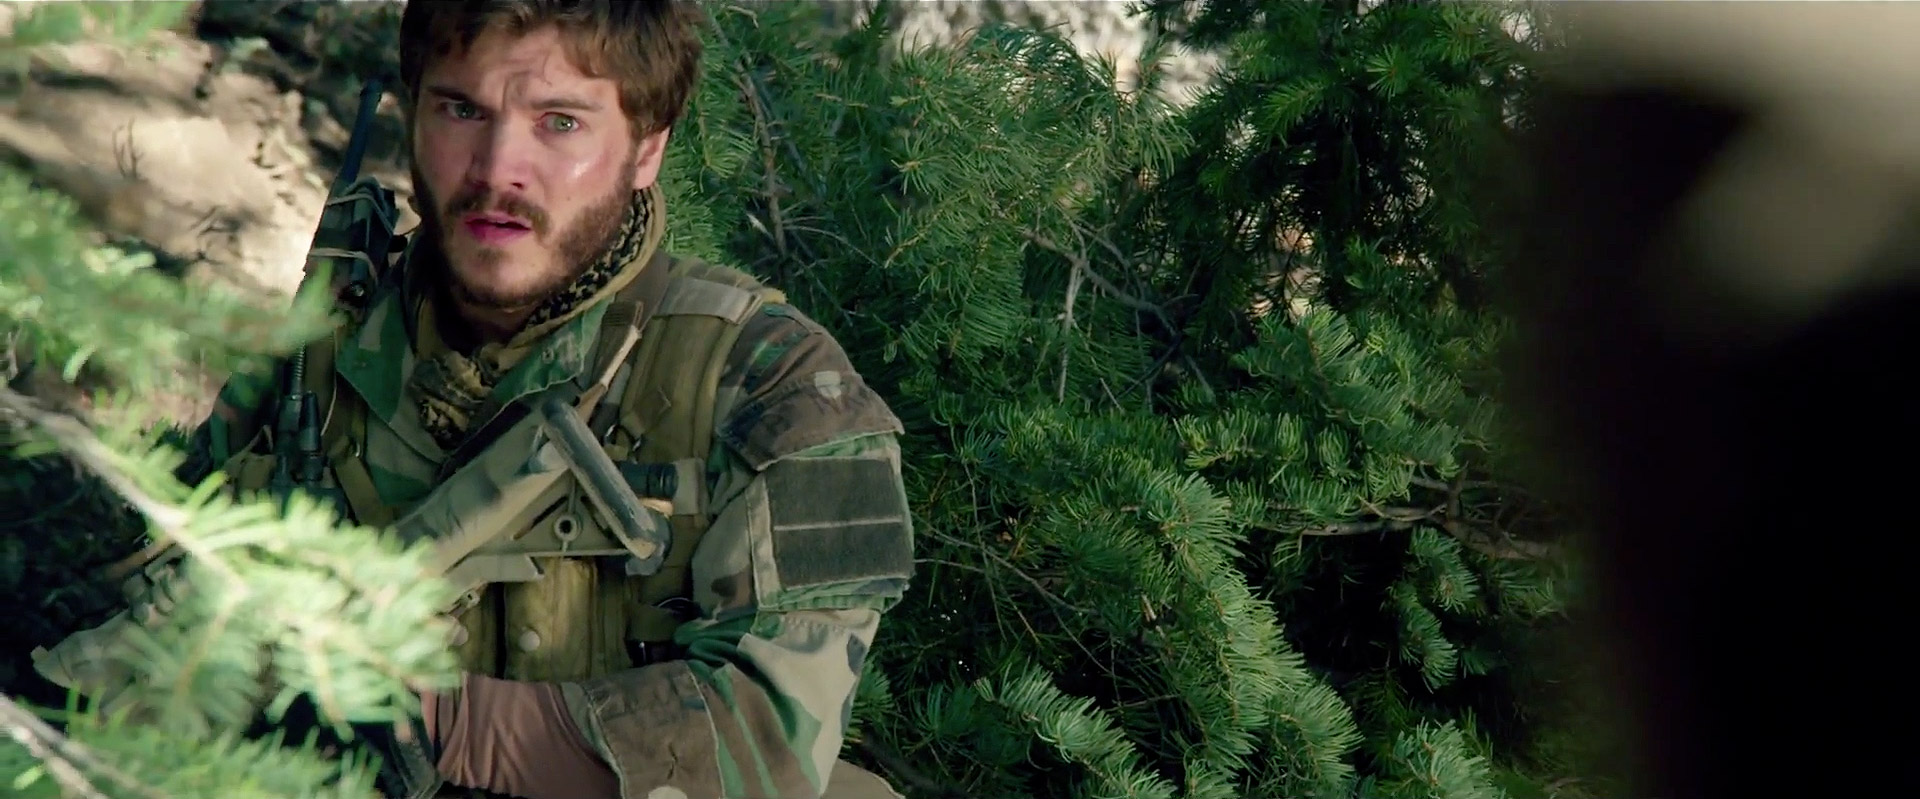 Forest Battle Scene, Lone Survivor (Mark Wahlberg)